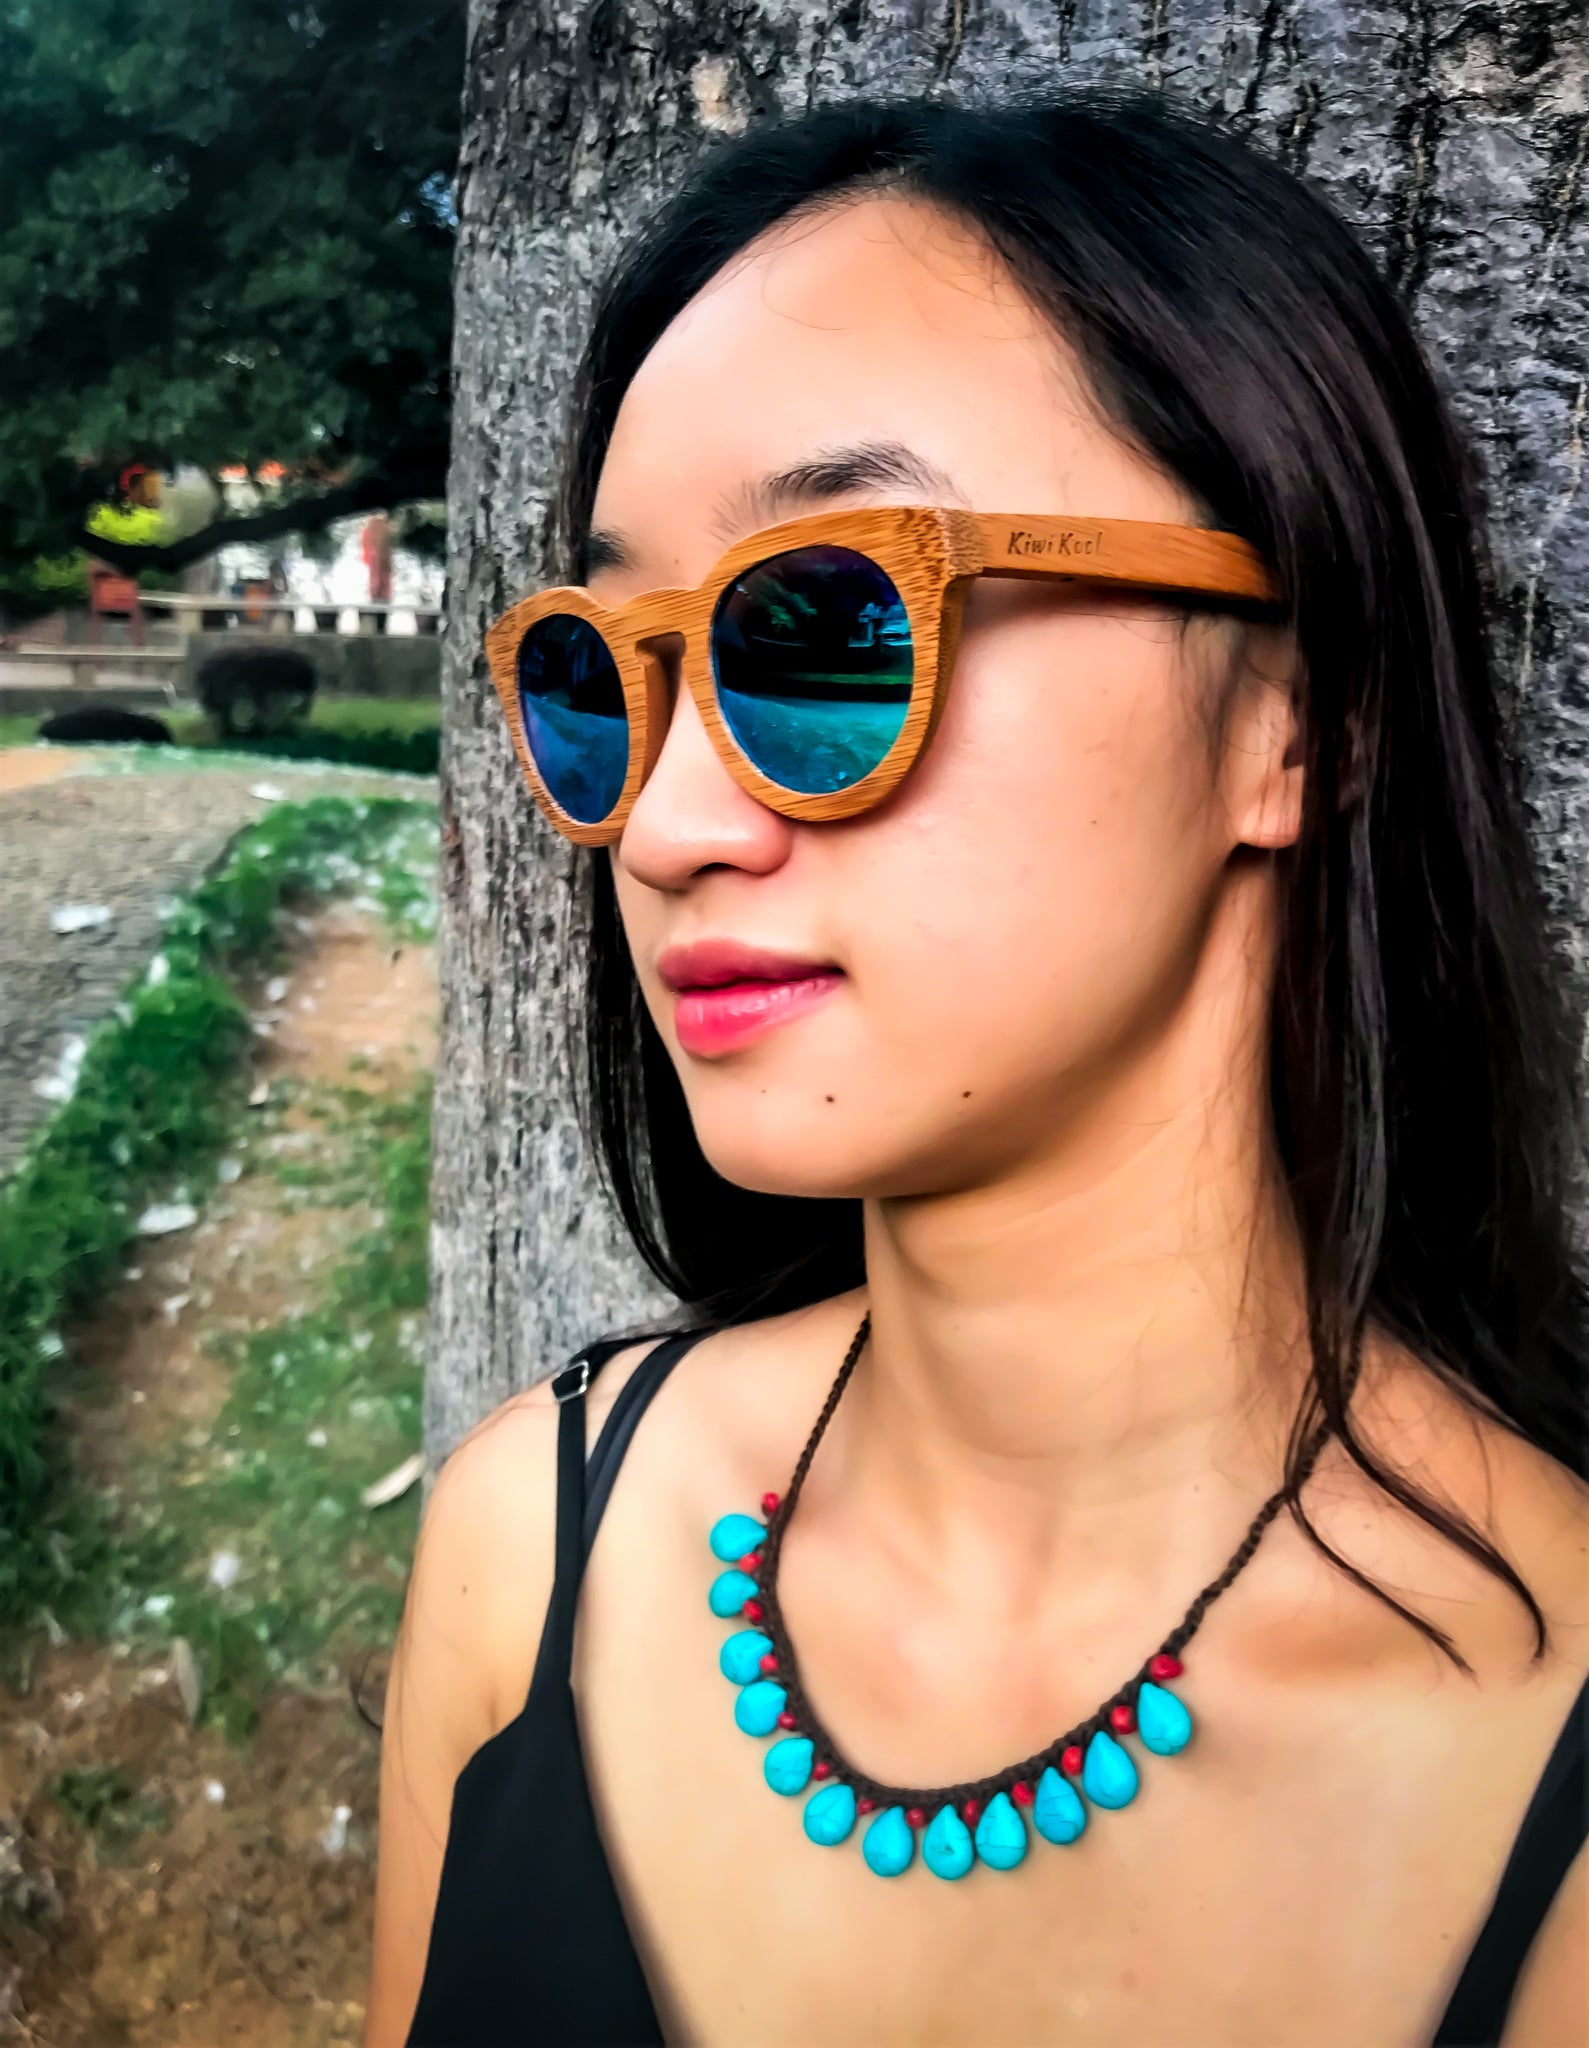 "Melbourne" Women's Cat Eye Polarized Bamboo Wood Sunglasses (Ice Blue Lens or Purple Lens)